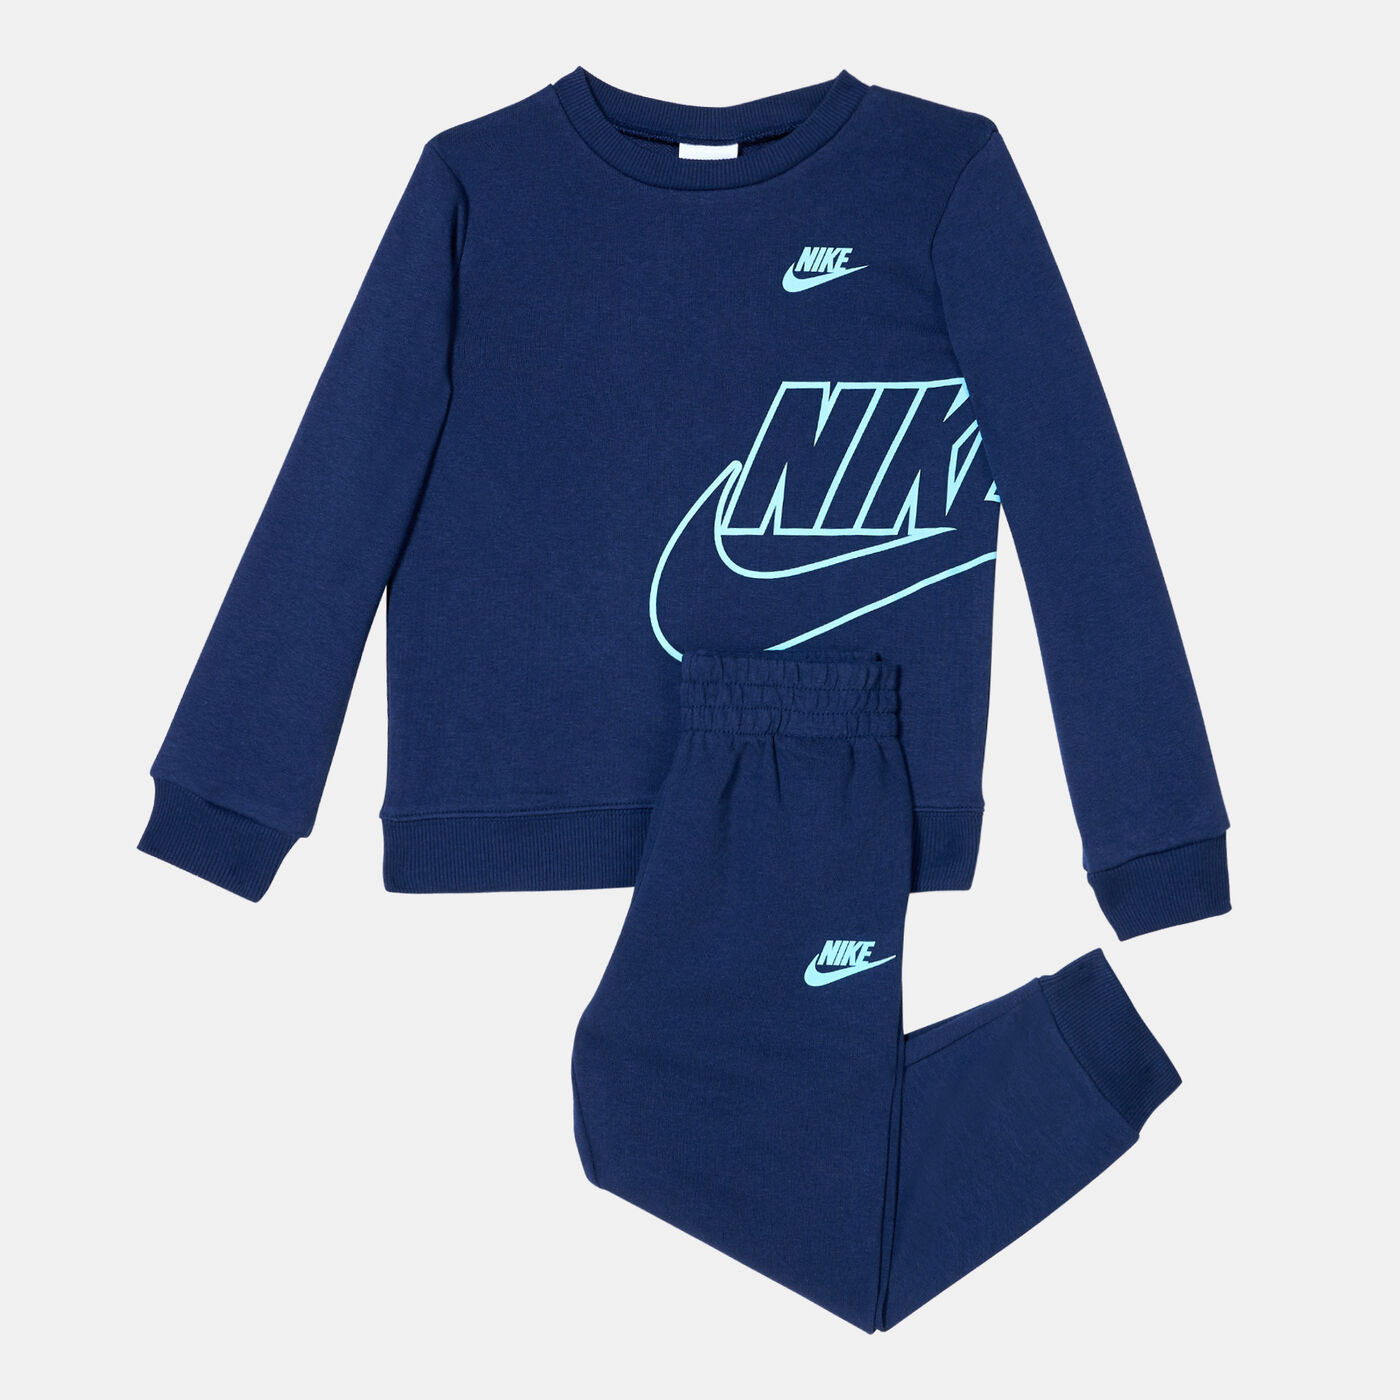 Kids' Sportswear Icon Sweatshirt and Sweatpants Set (Babies and Younger Kids)